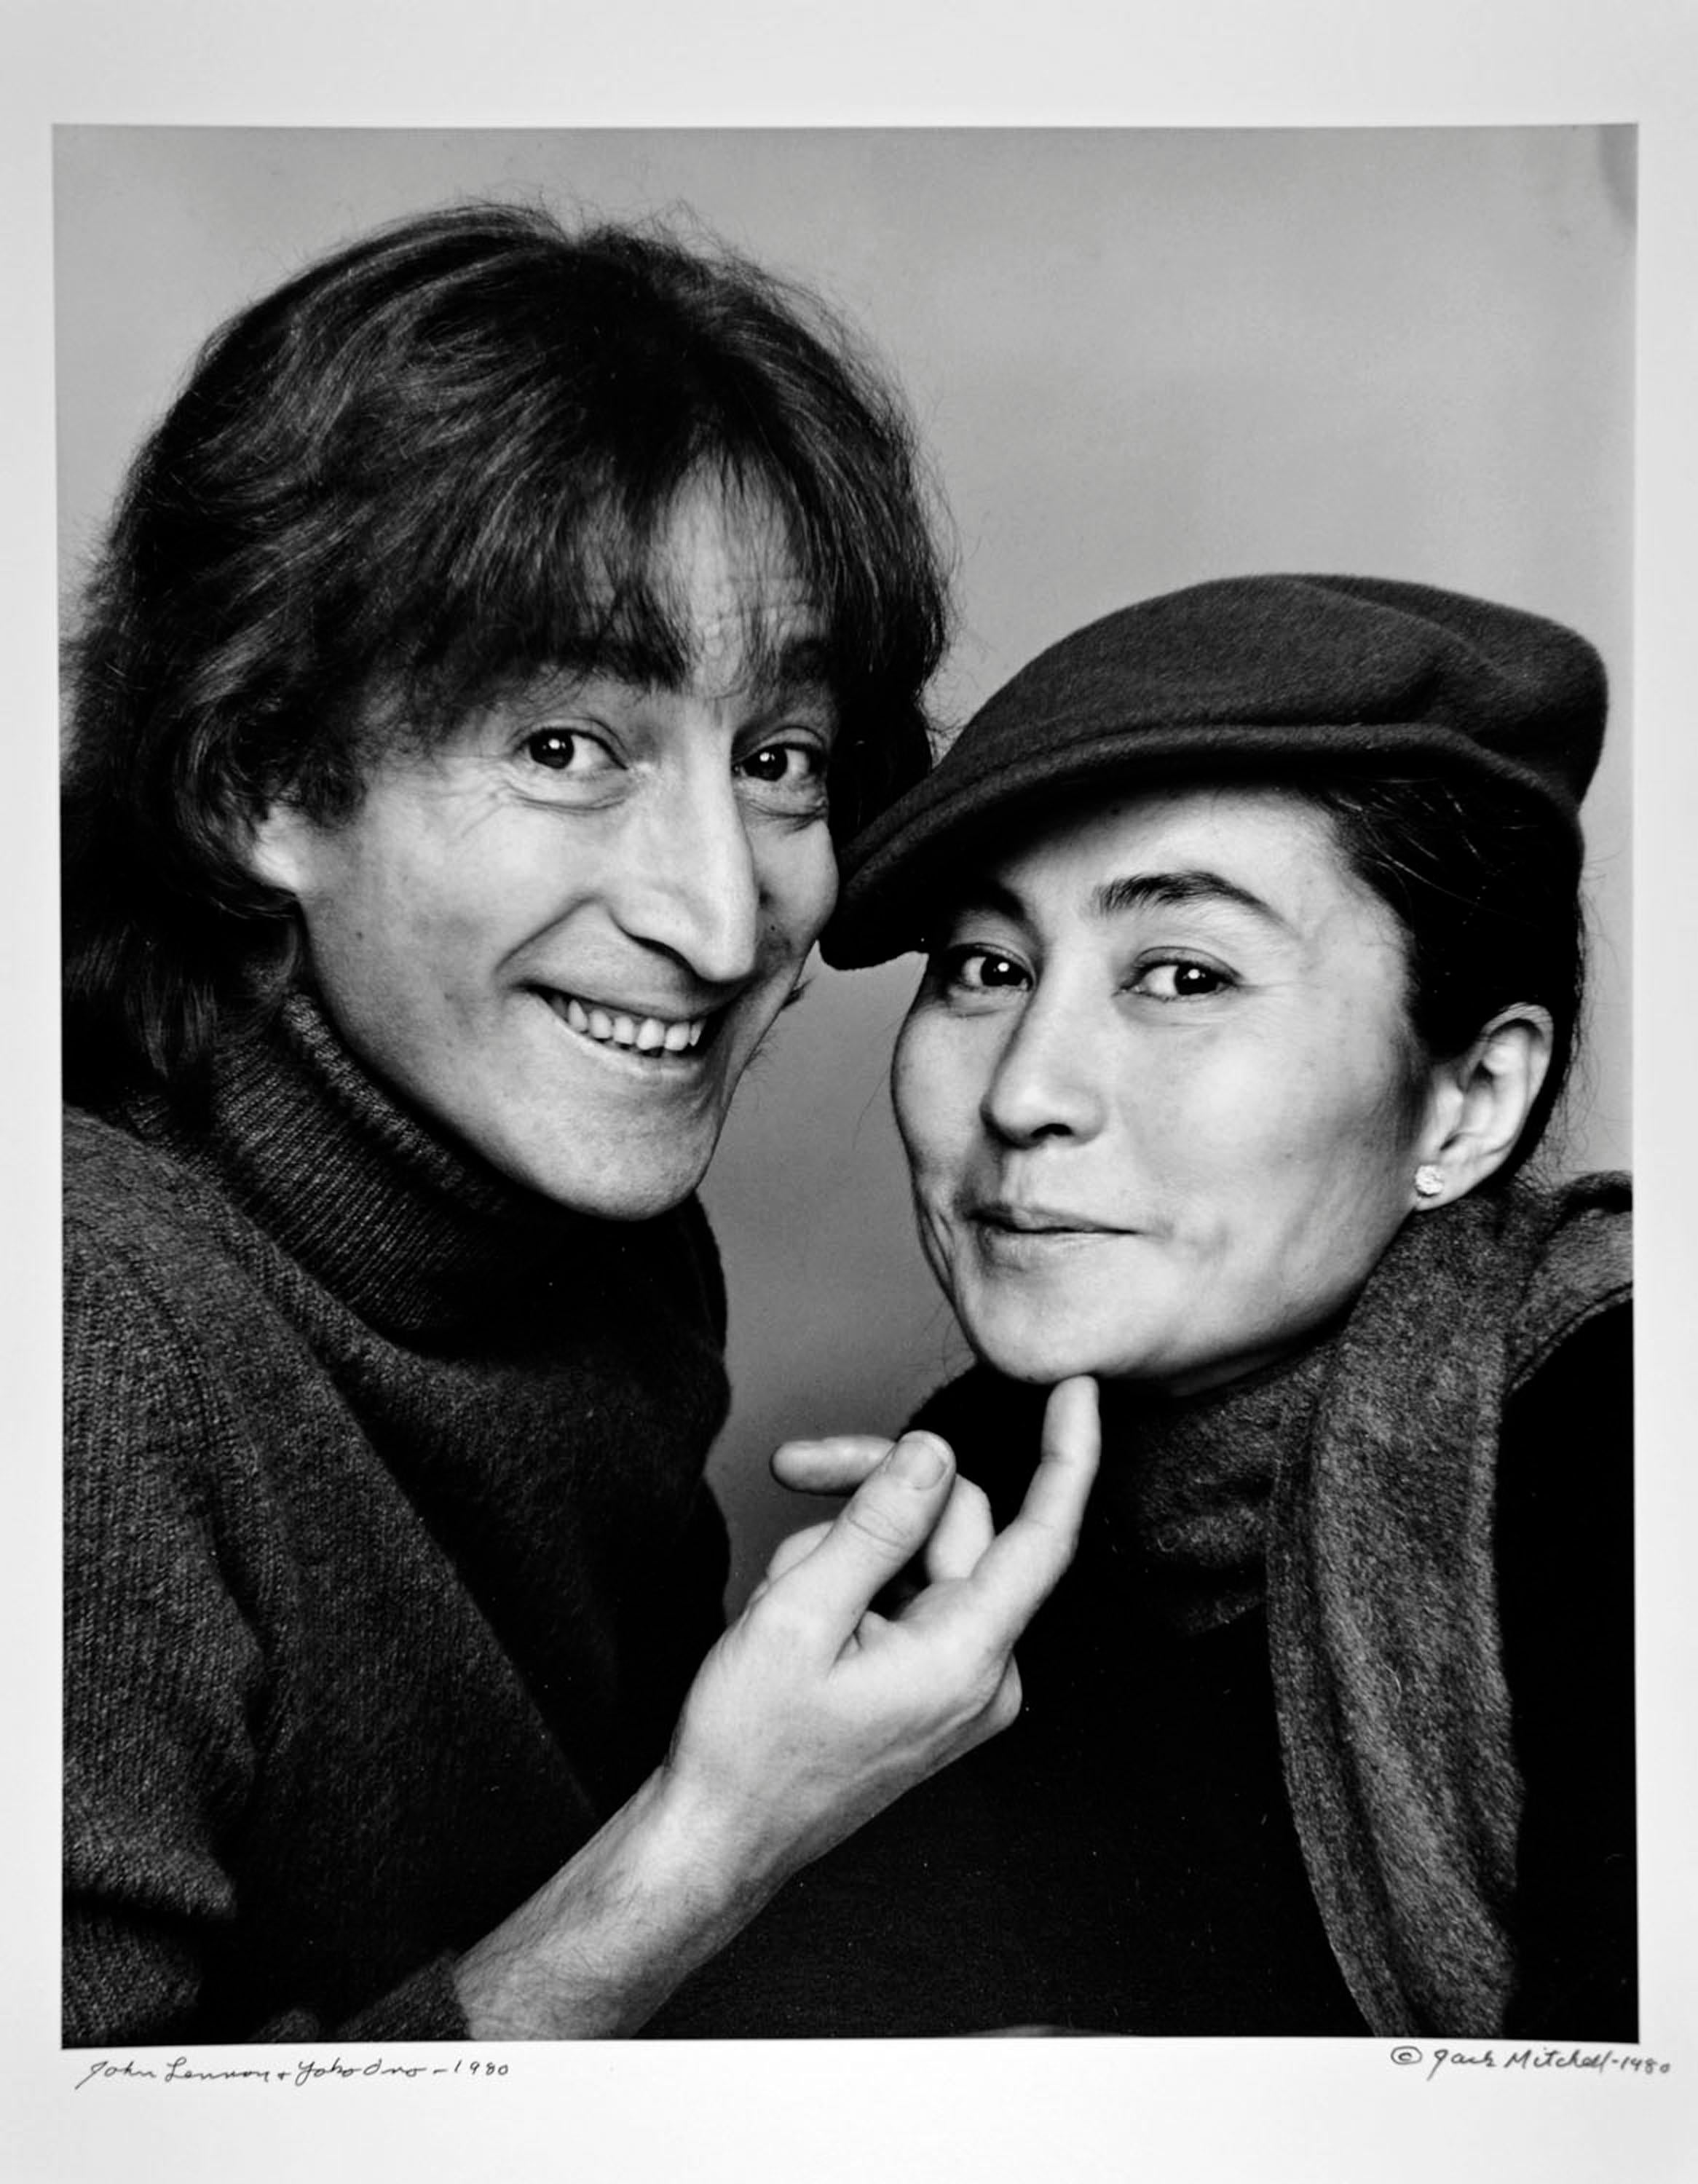 Black and White Photograph Jack Mitchell - John Lennon et Yoko Ono photographiés le 2 novembre, signés